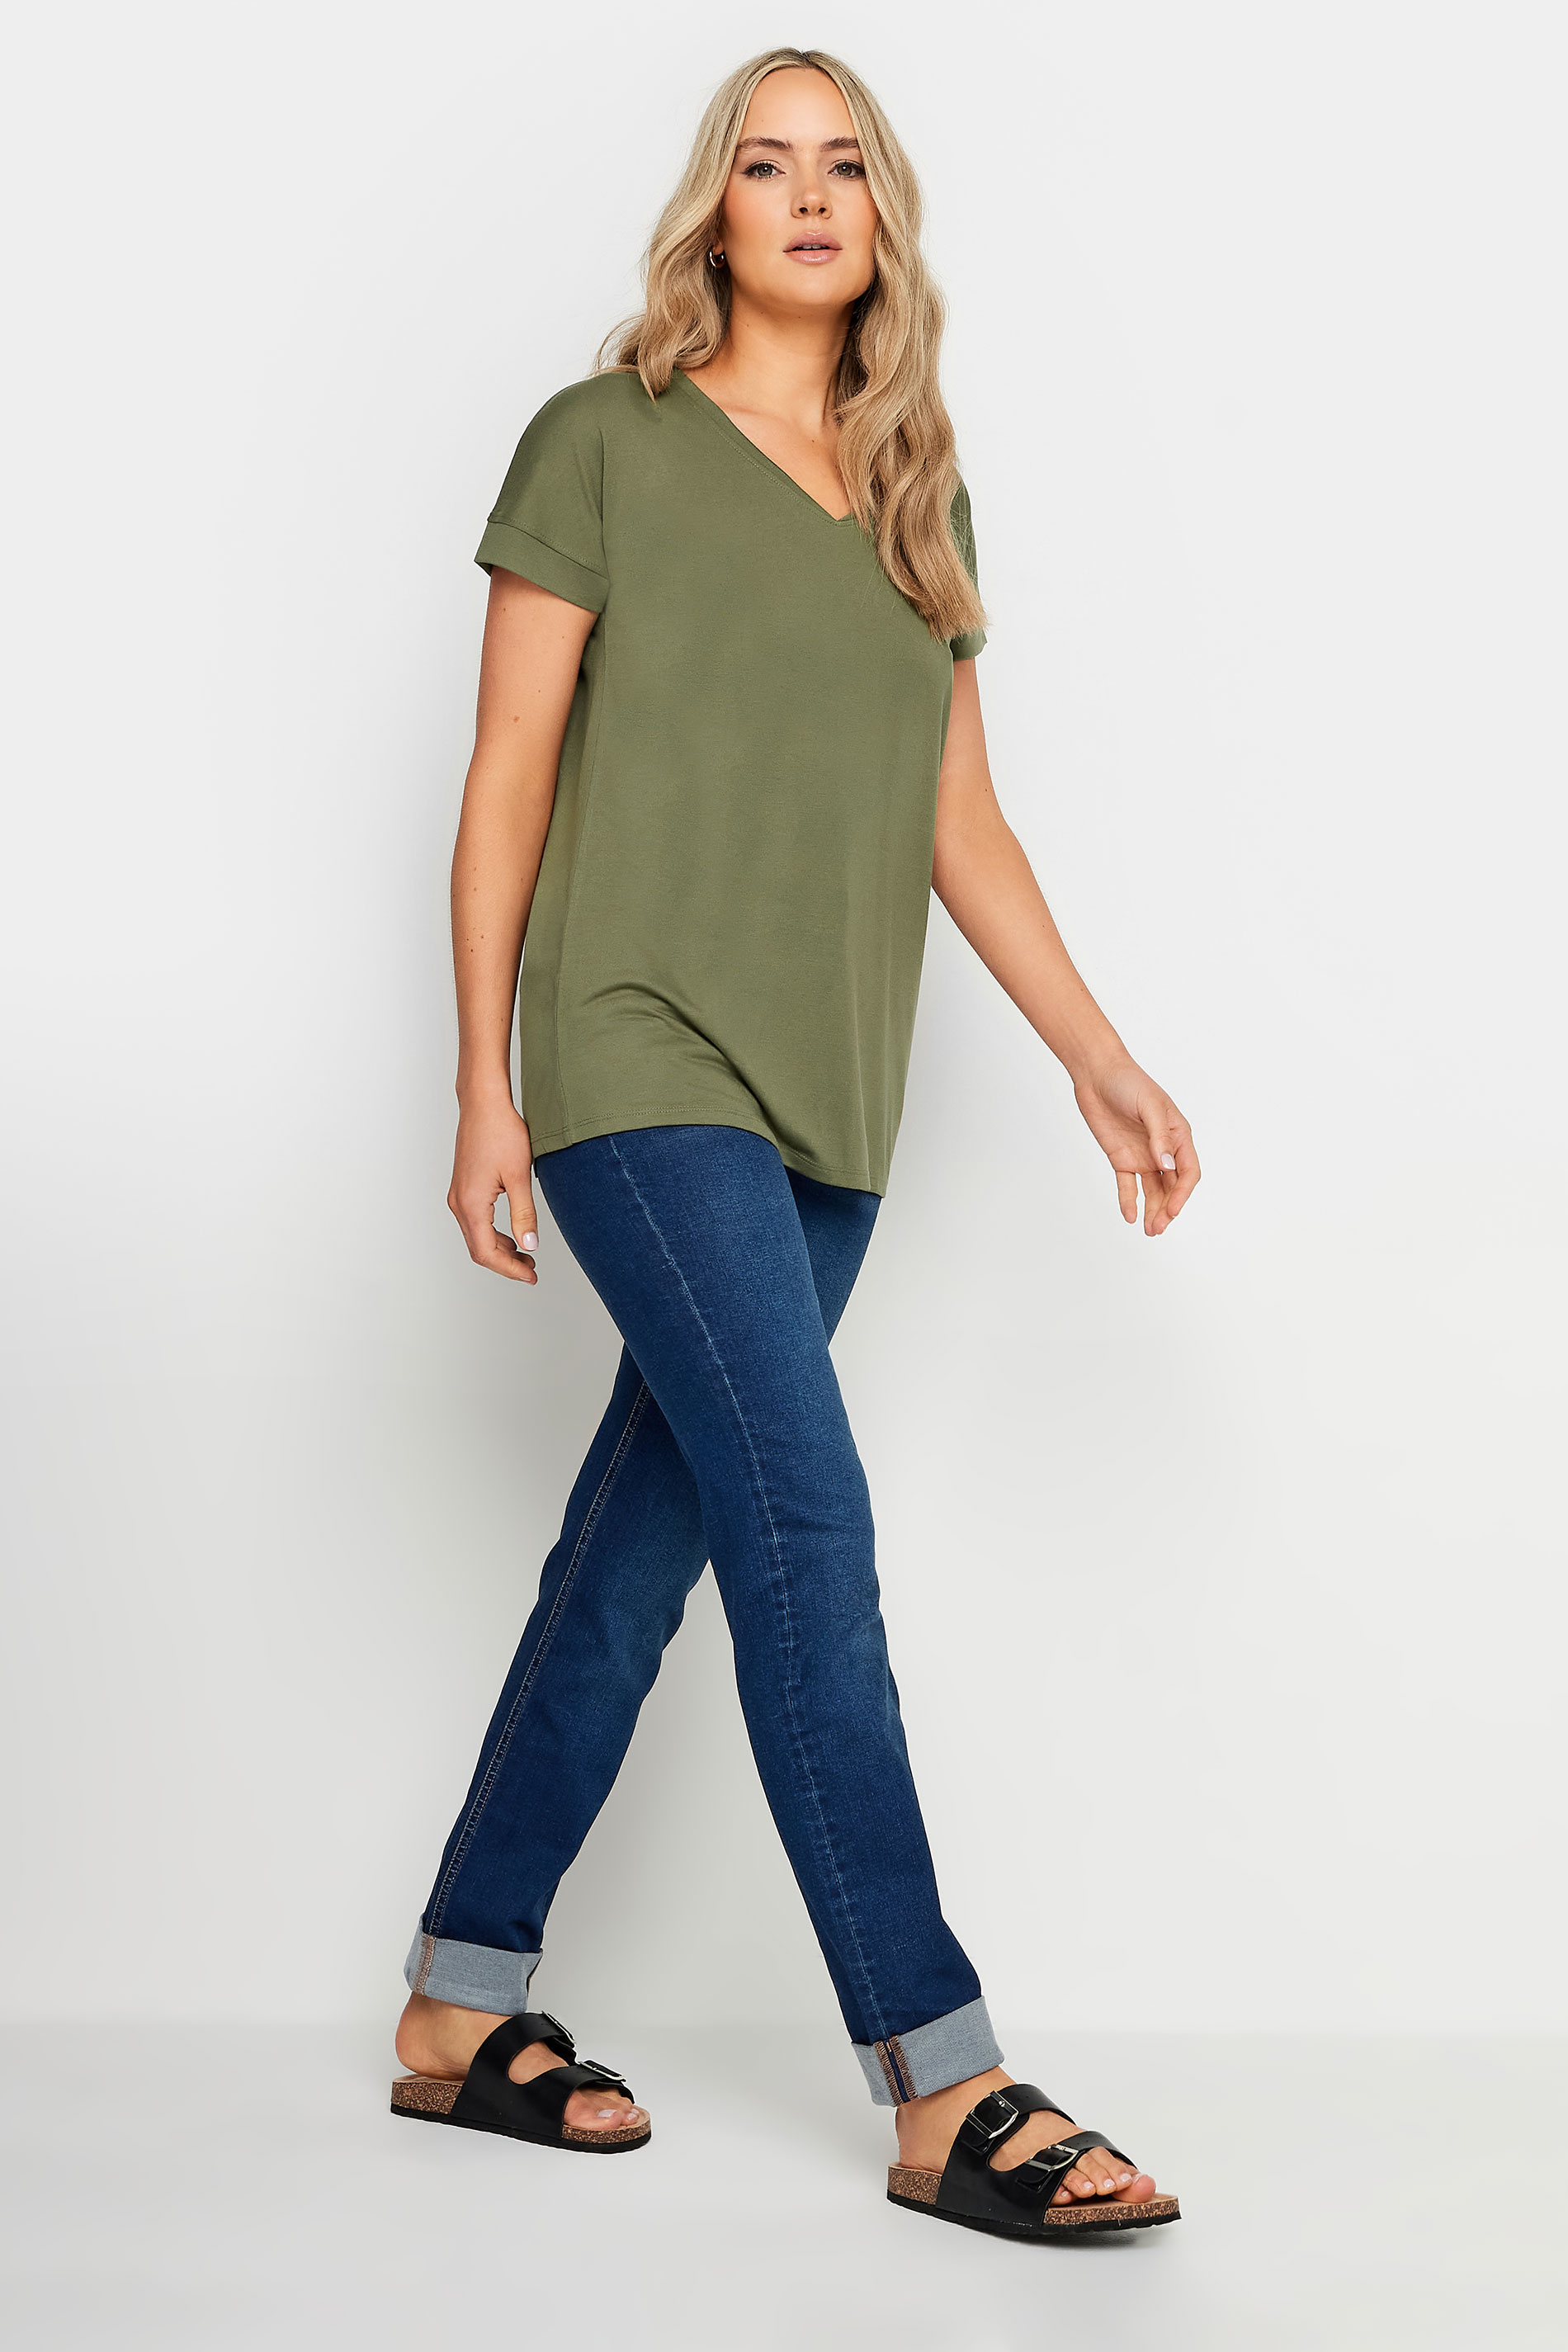 LTS PREMIUM Tall Women's Khaki Green V-Neck T-Shirt | Long Tall Sally 2